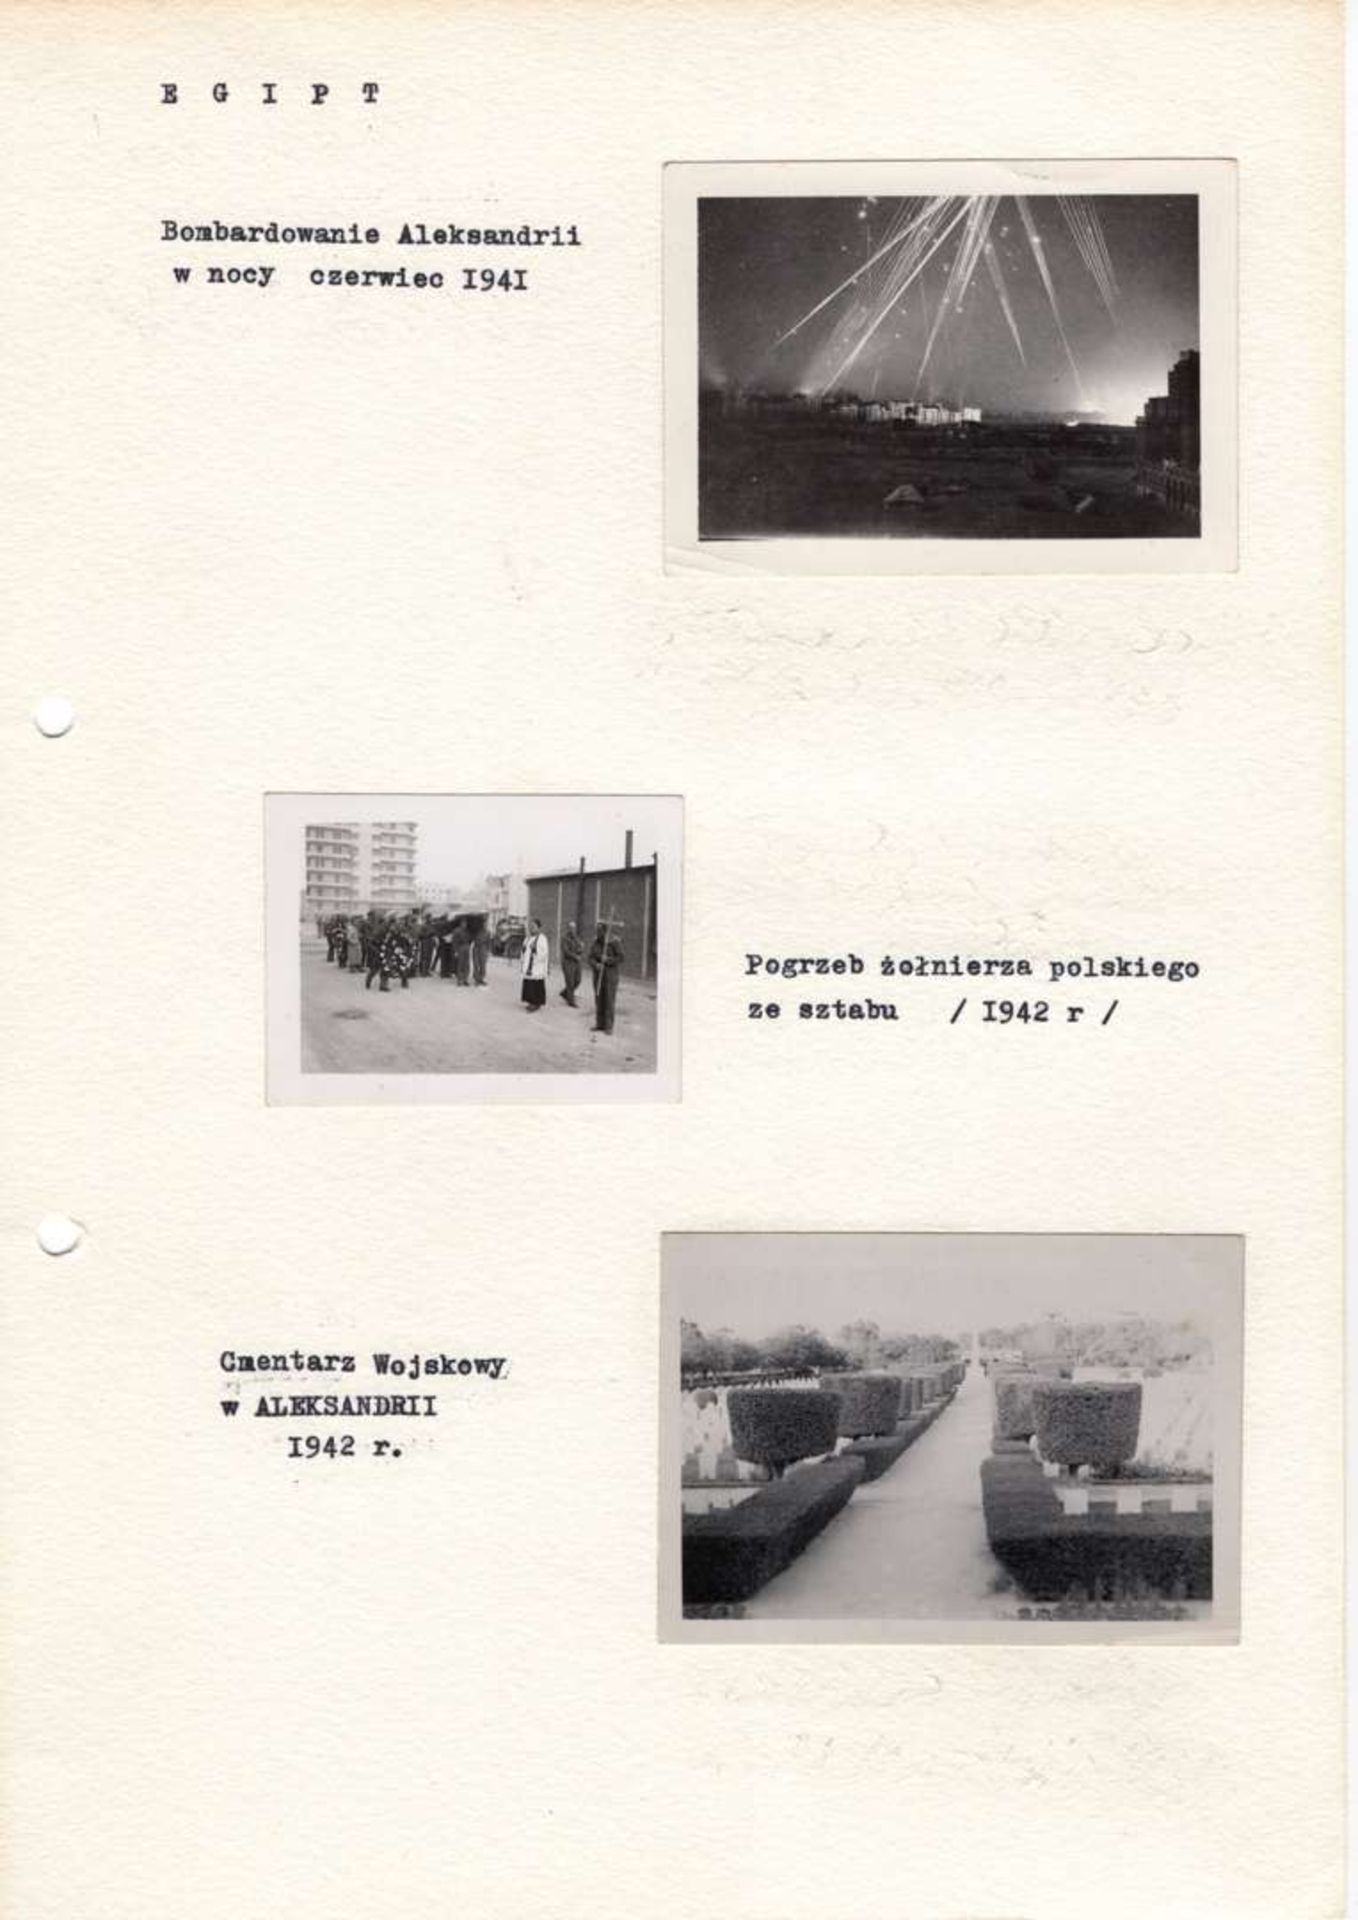 WW2 Polish Photo Bombing of Alexandria 1941/42